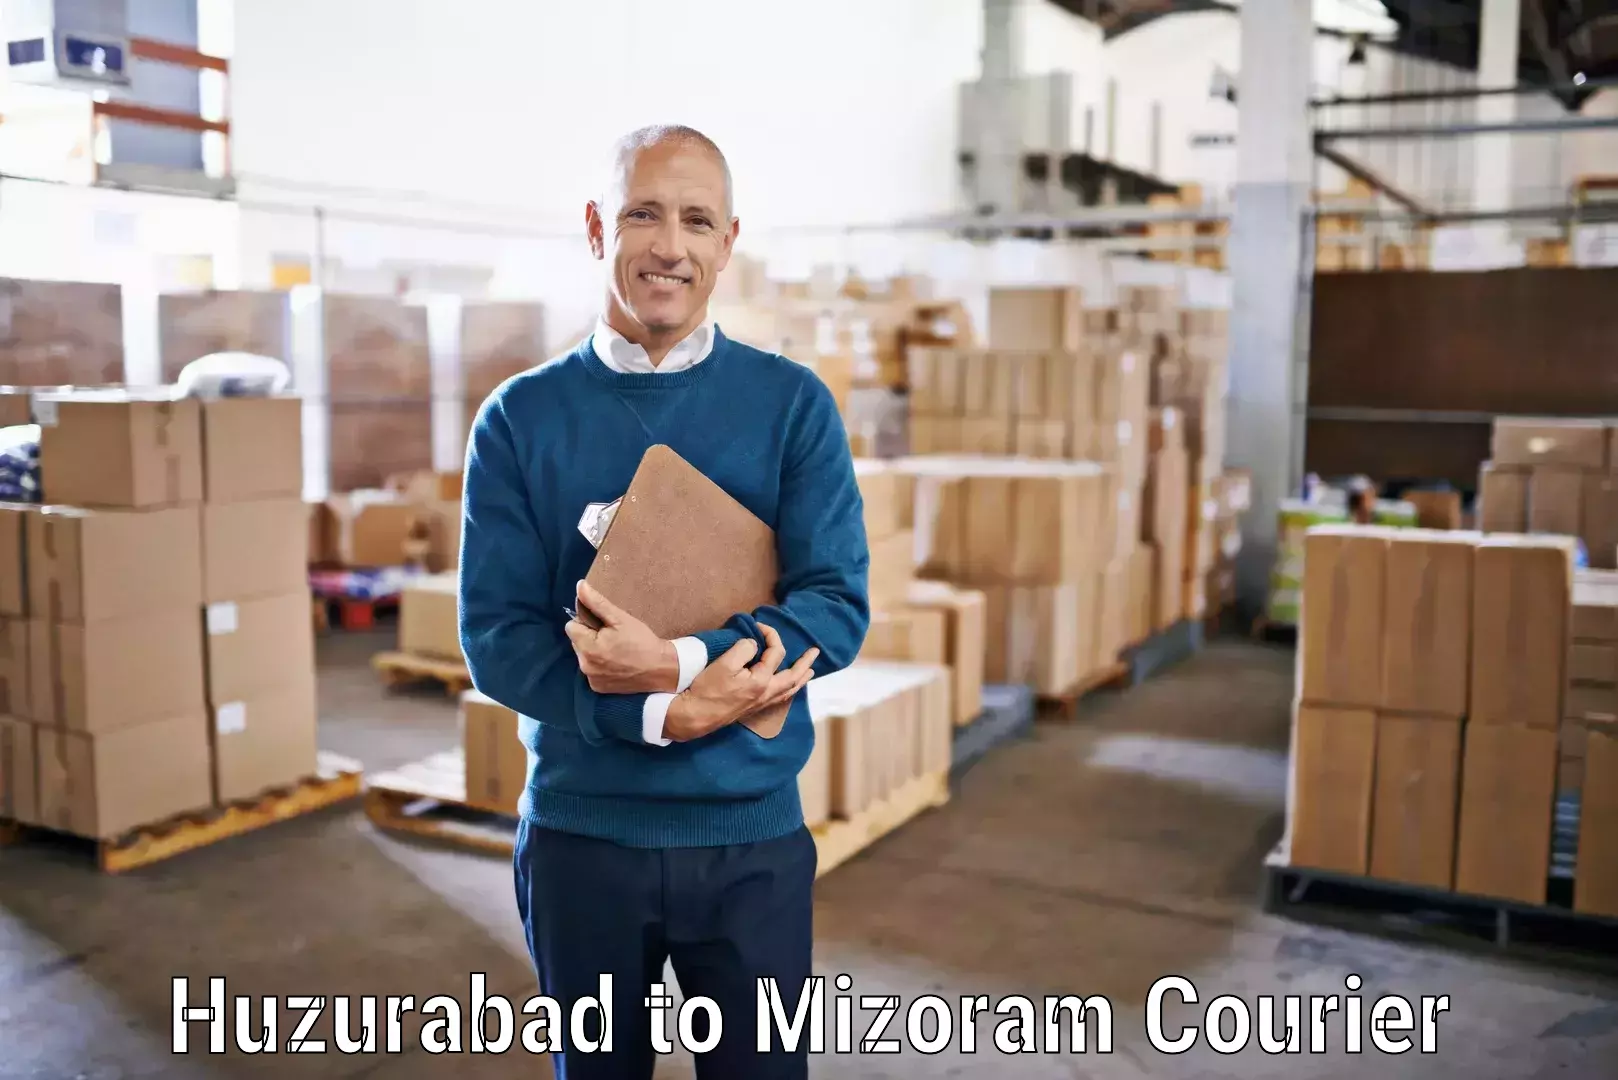 Reliable courier service Huzurabad to Mizoram